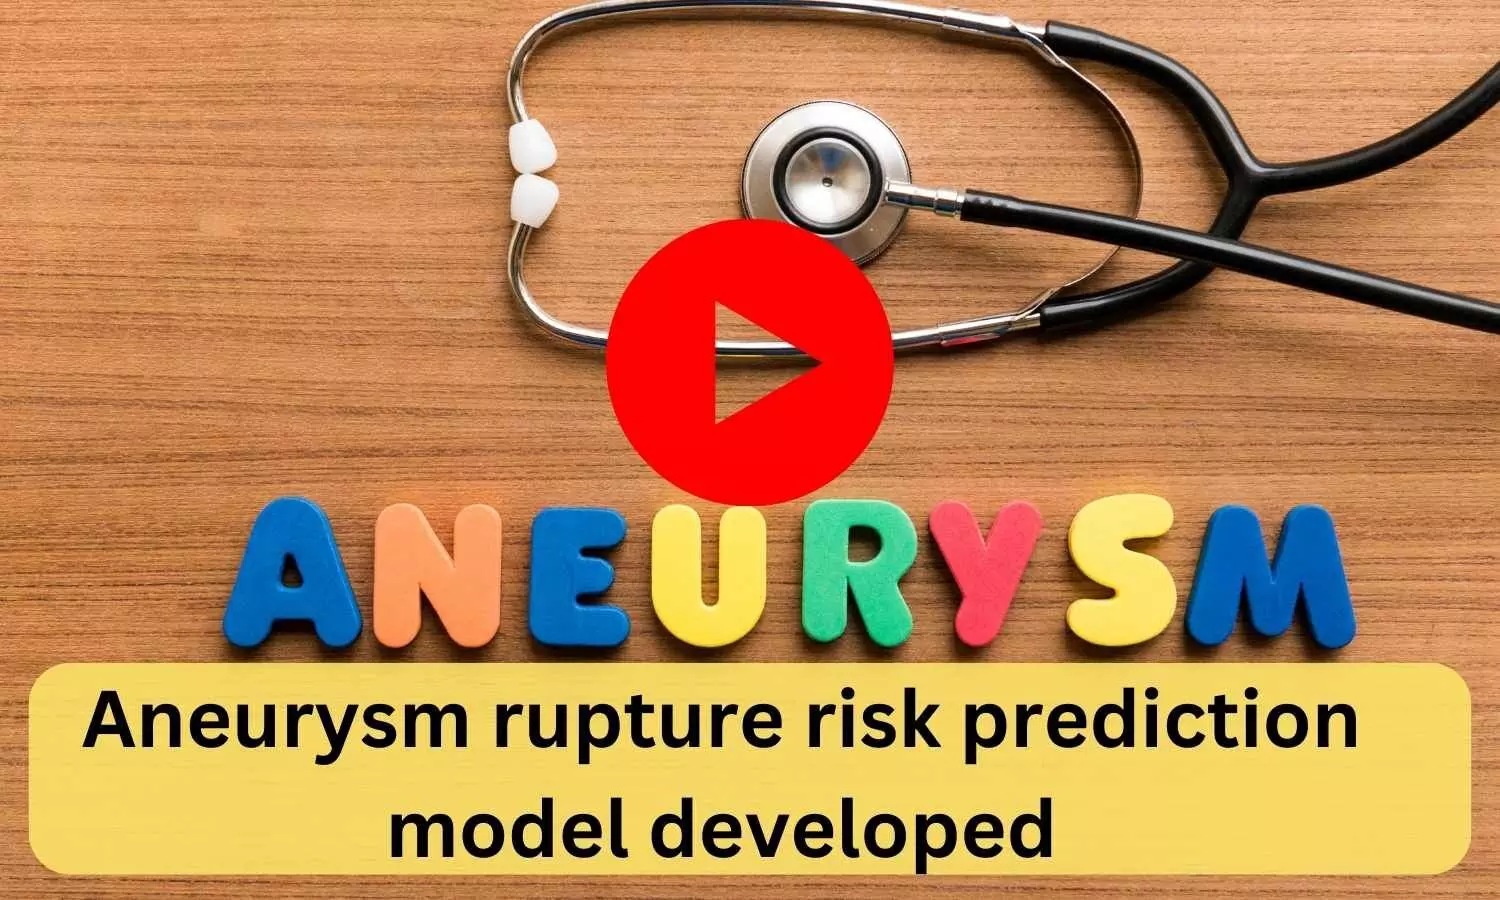 Aneurysm rupture risk prediction model developed